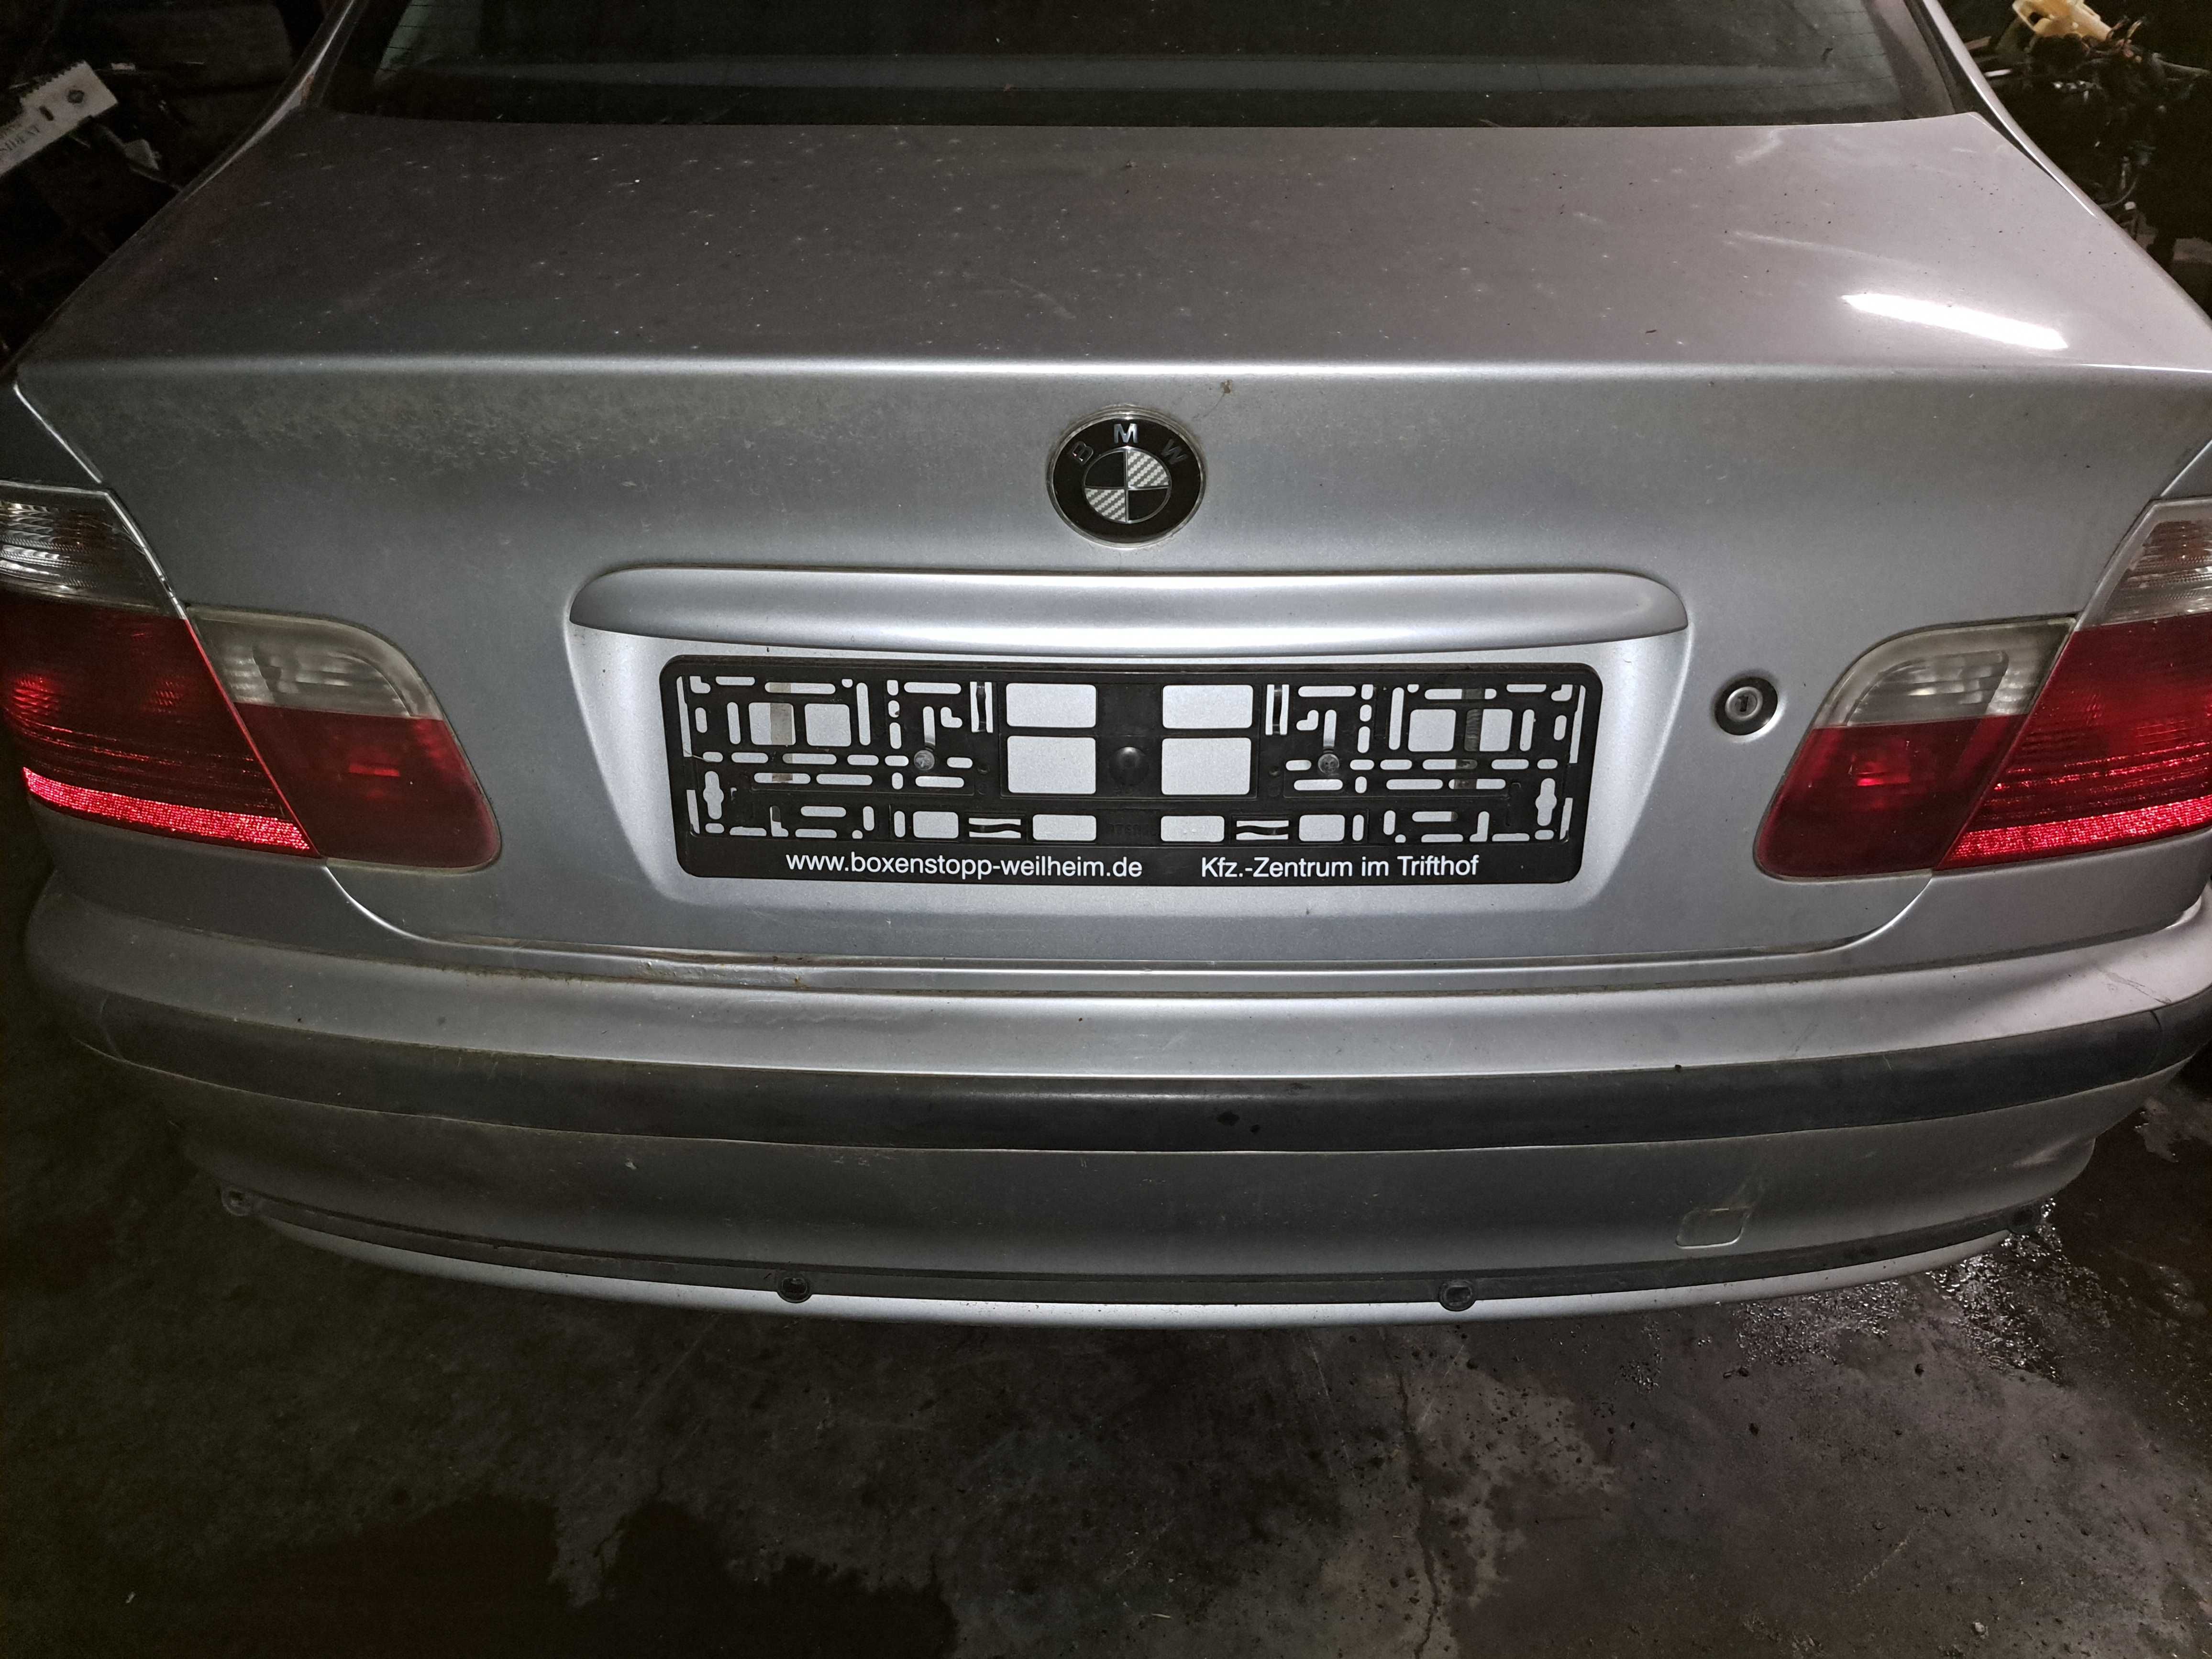 Klapa tył BMW e46 sedan przedlift titansilber metallic 354/7